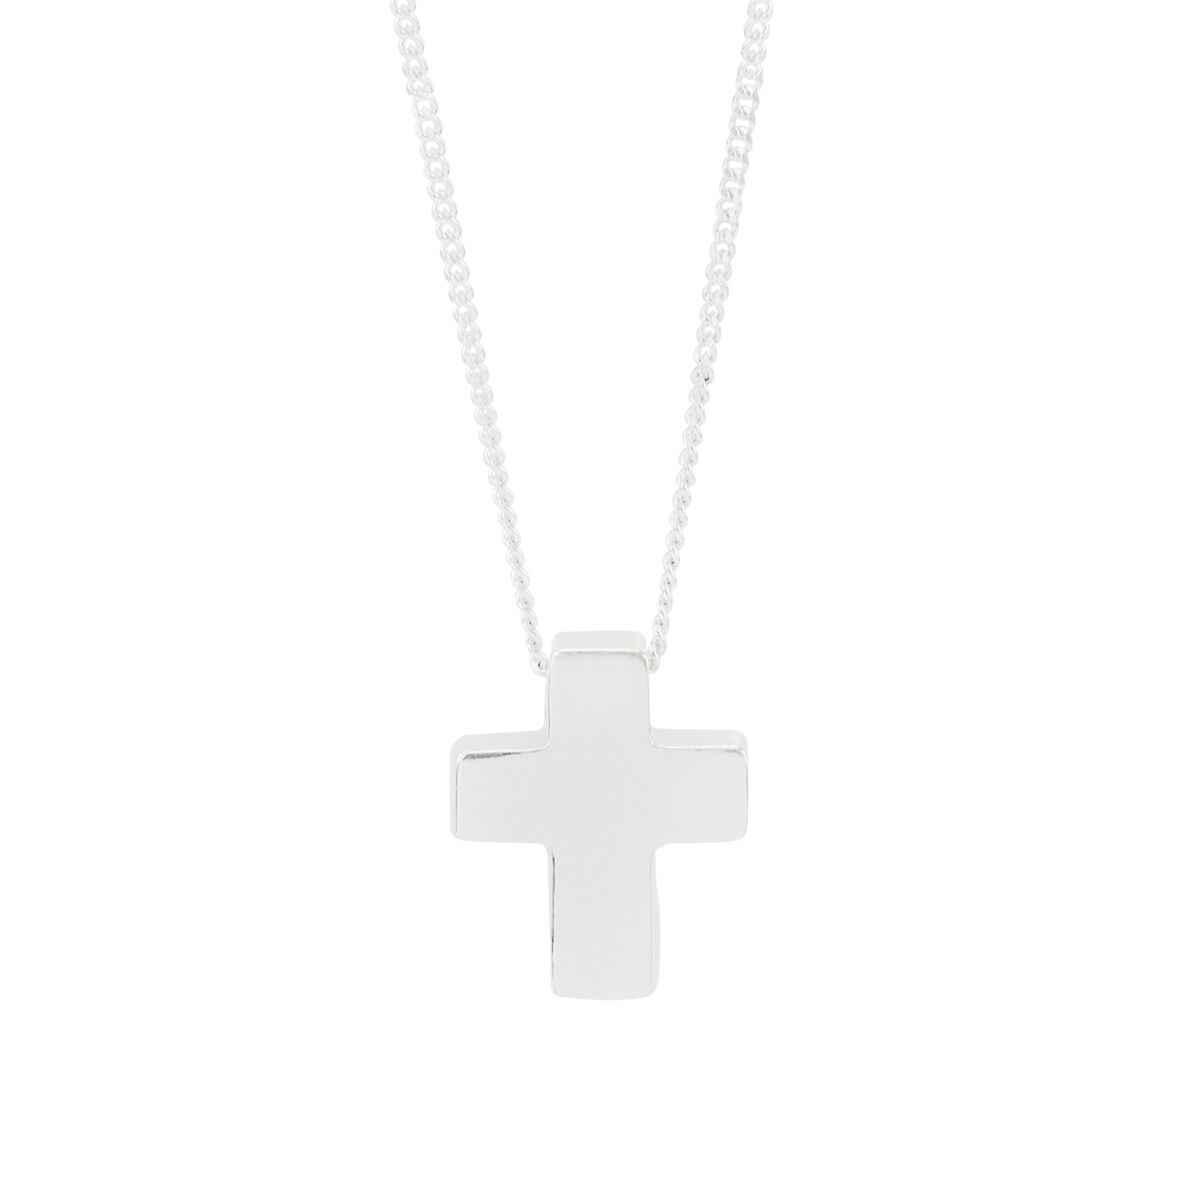 Annika Witt Cross Pendant Filigree Intricate Sterling Silver Necklace ATI  ID 925 | eBay